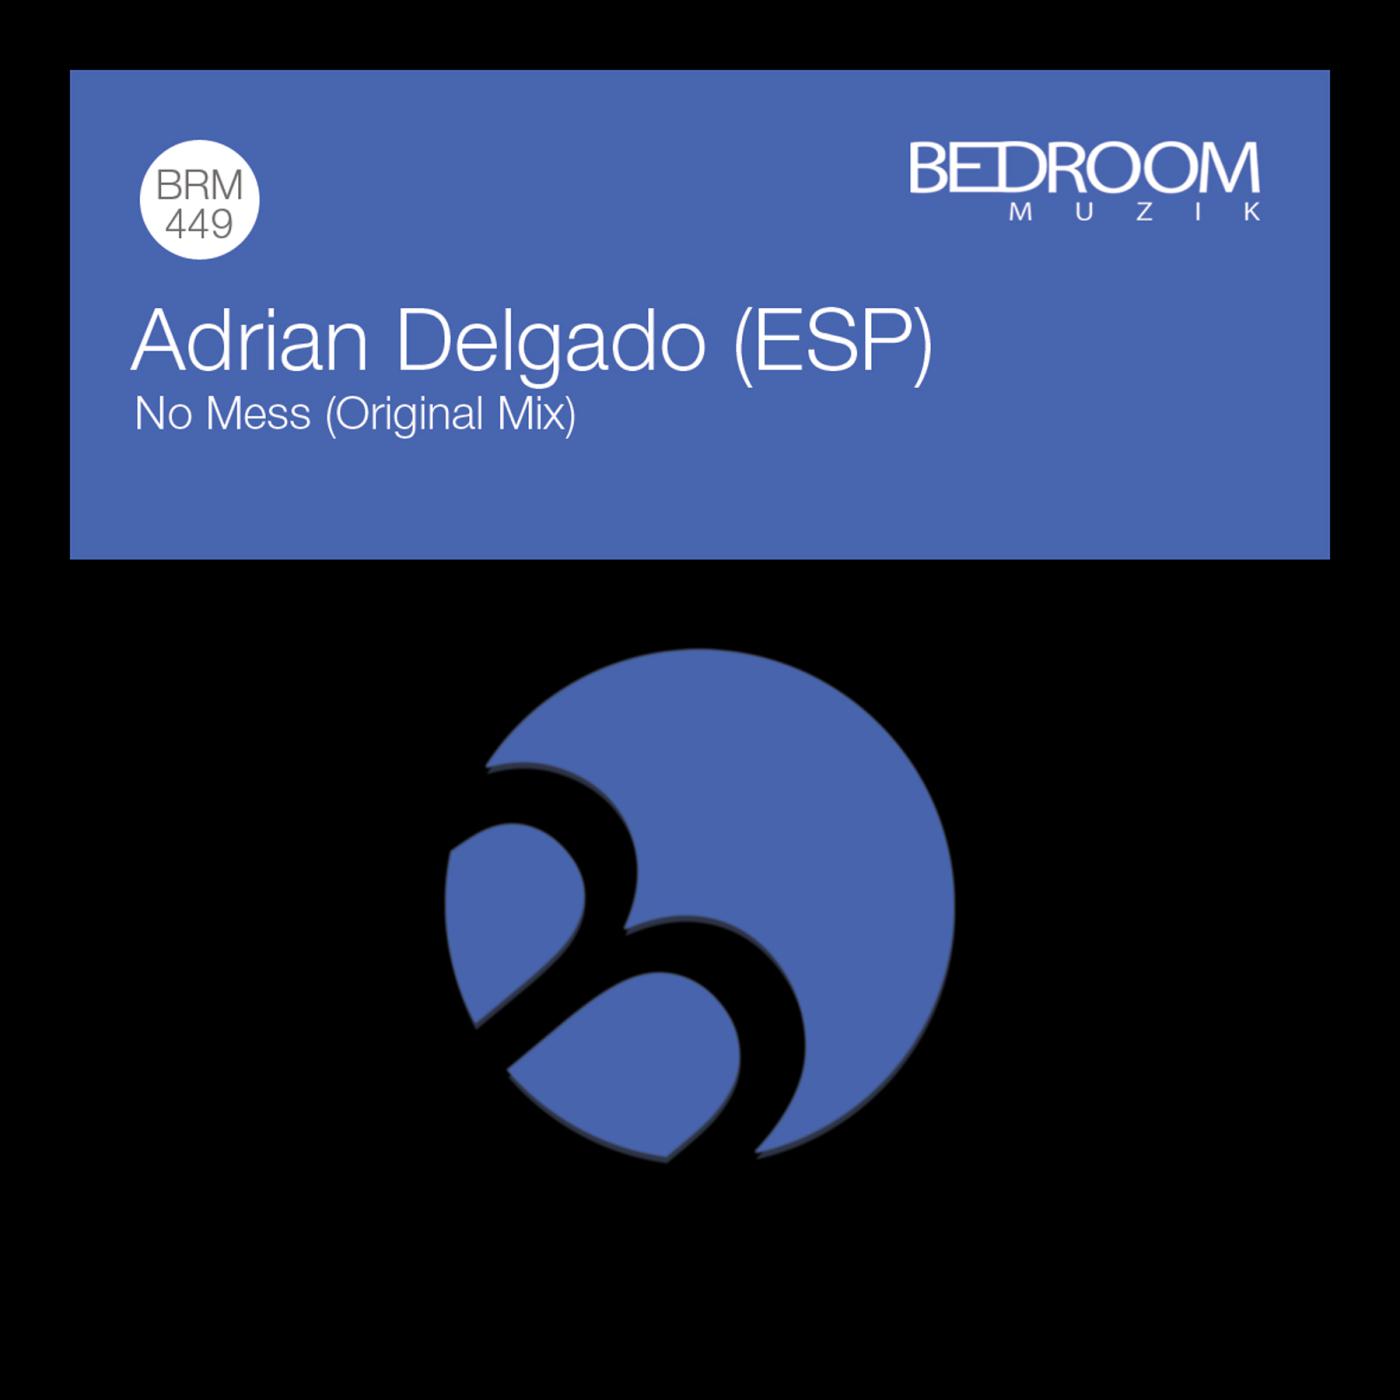 Adrian Delgado (ESP) - No Mess